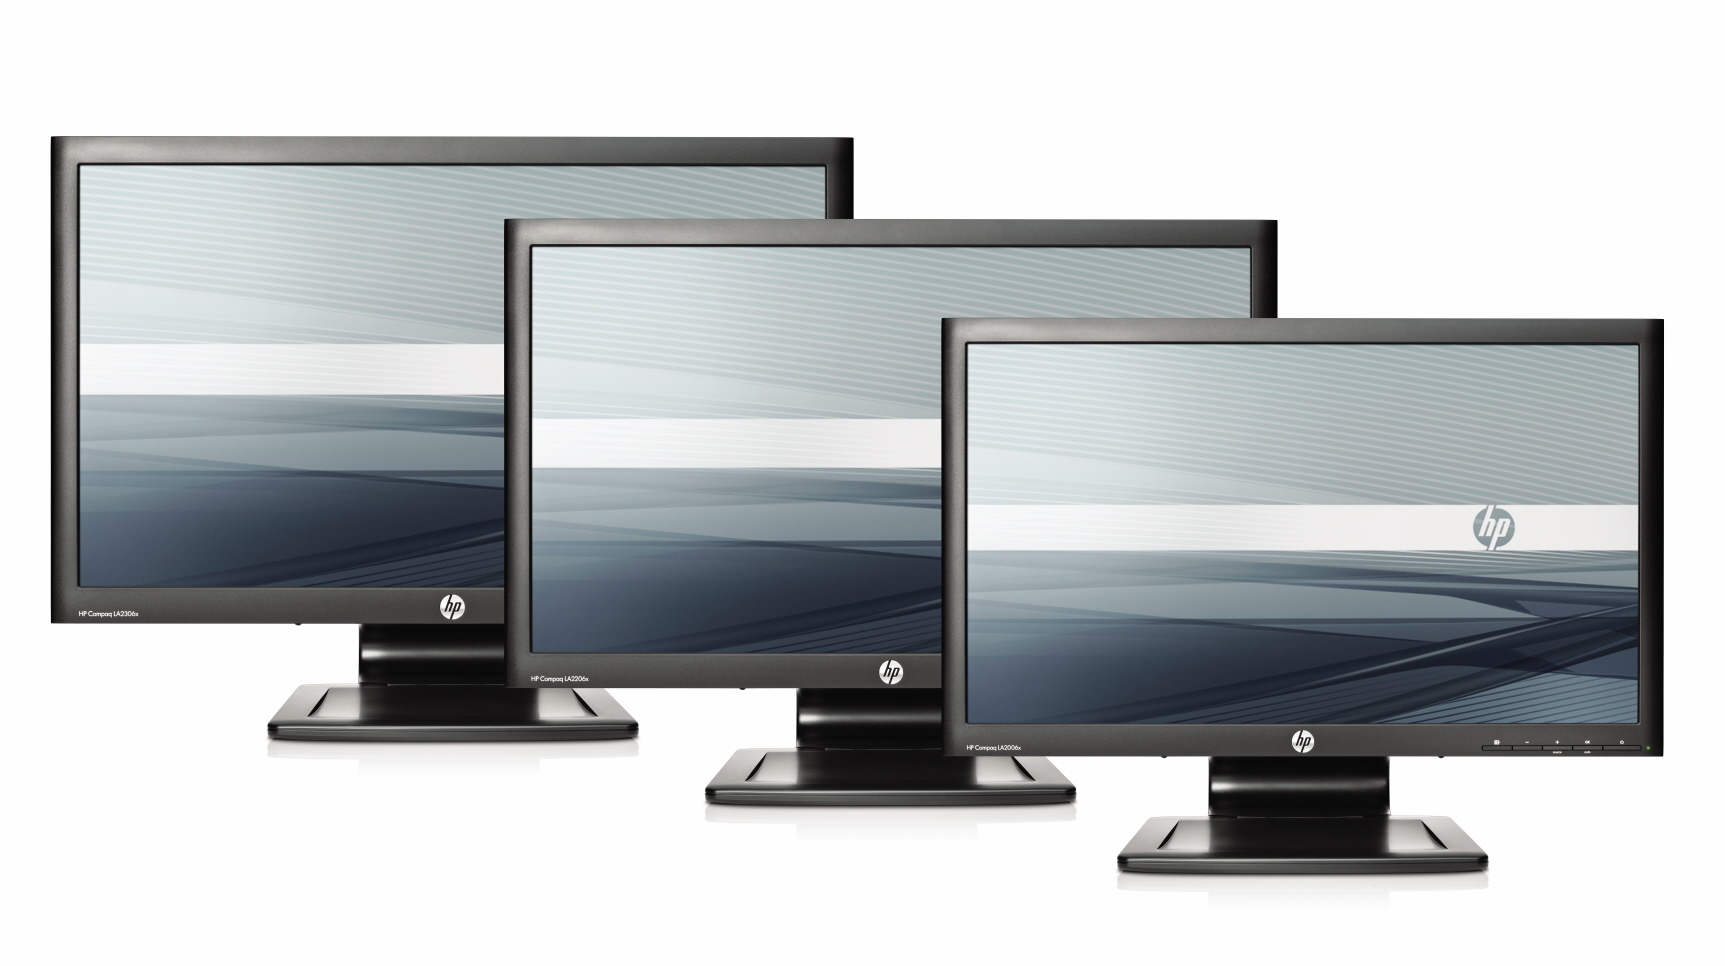 HP Compaq LA2306x 23-inch LED Backlit LCD Monitor | ClickBD